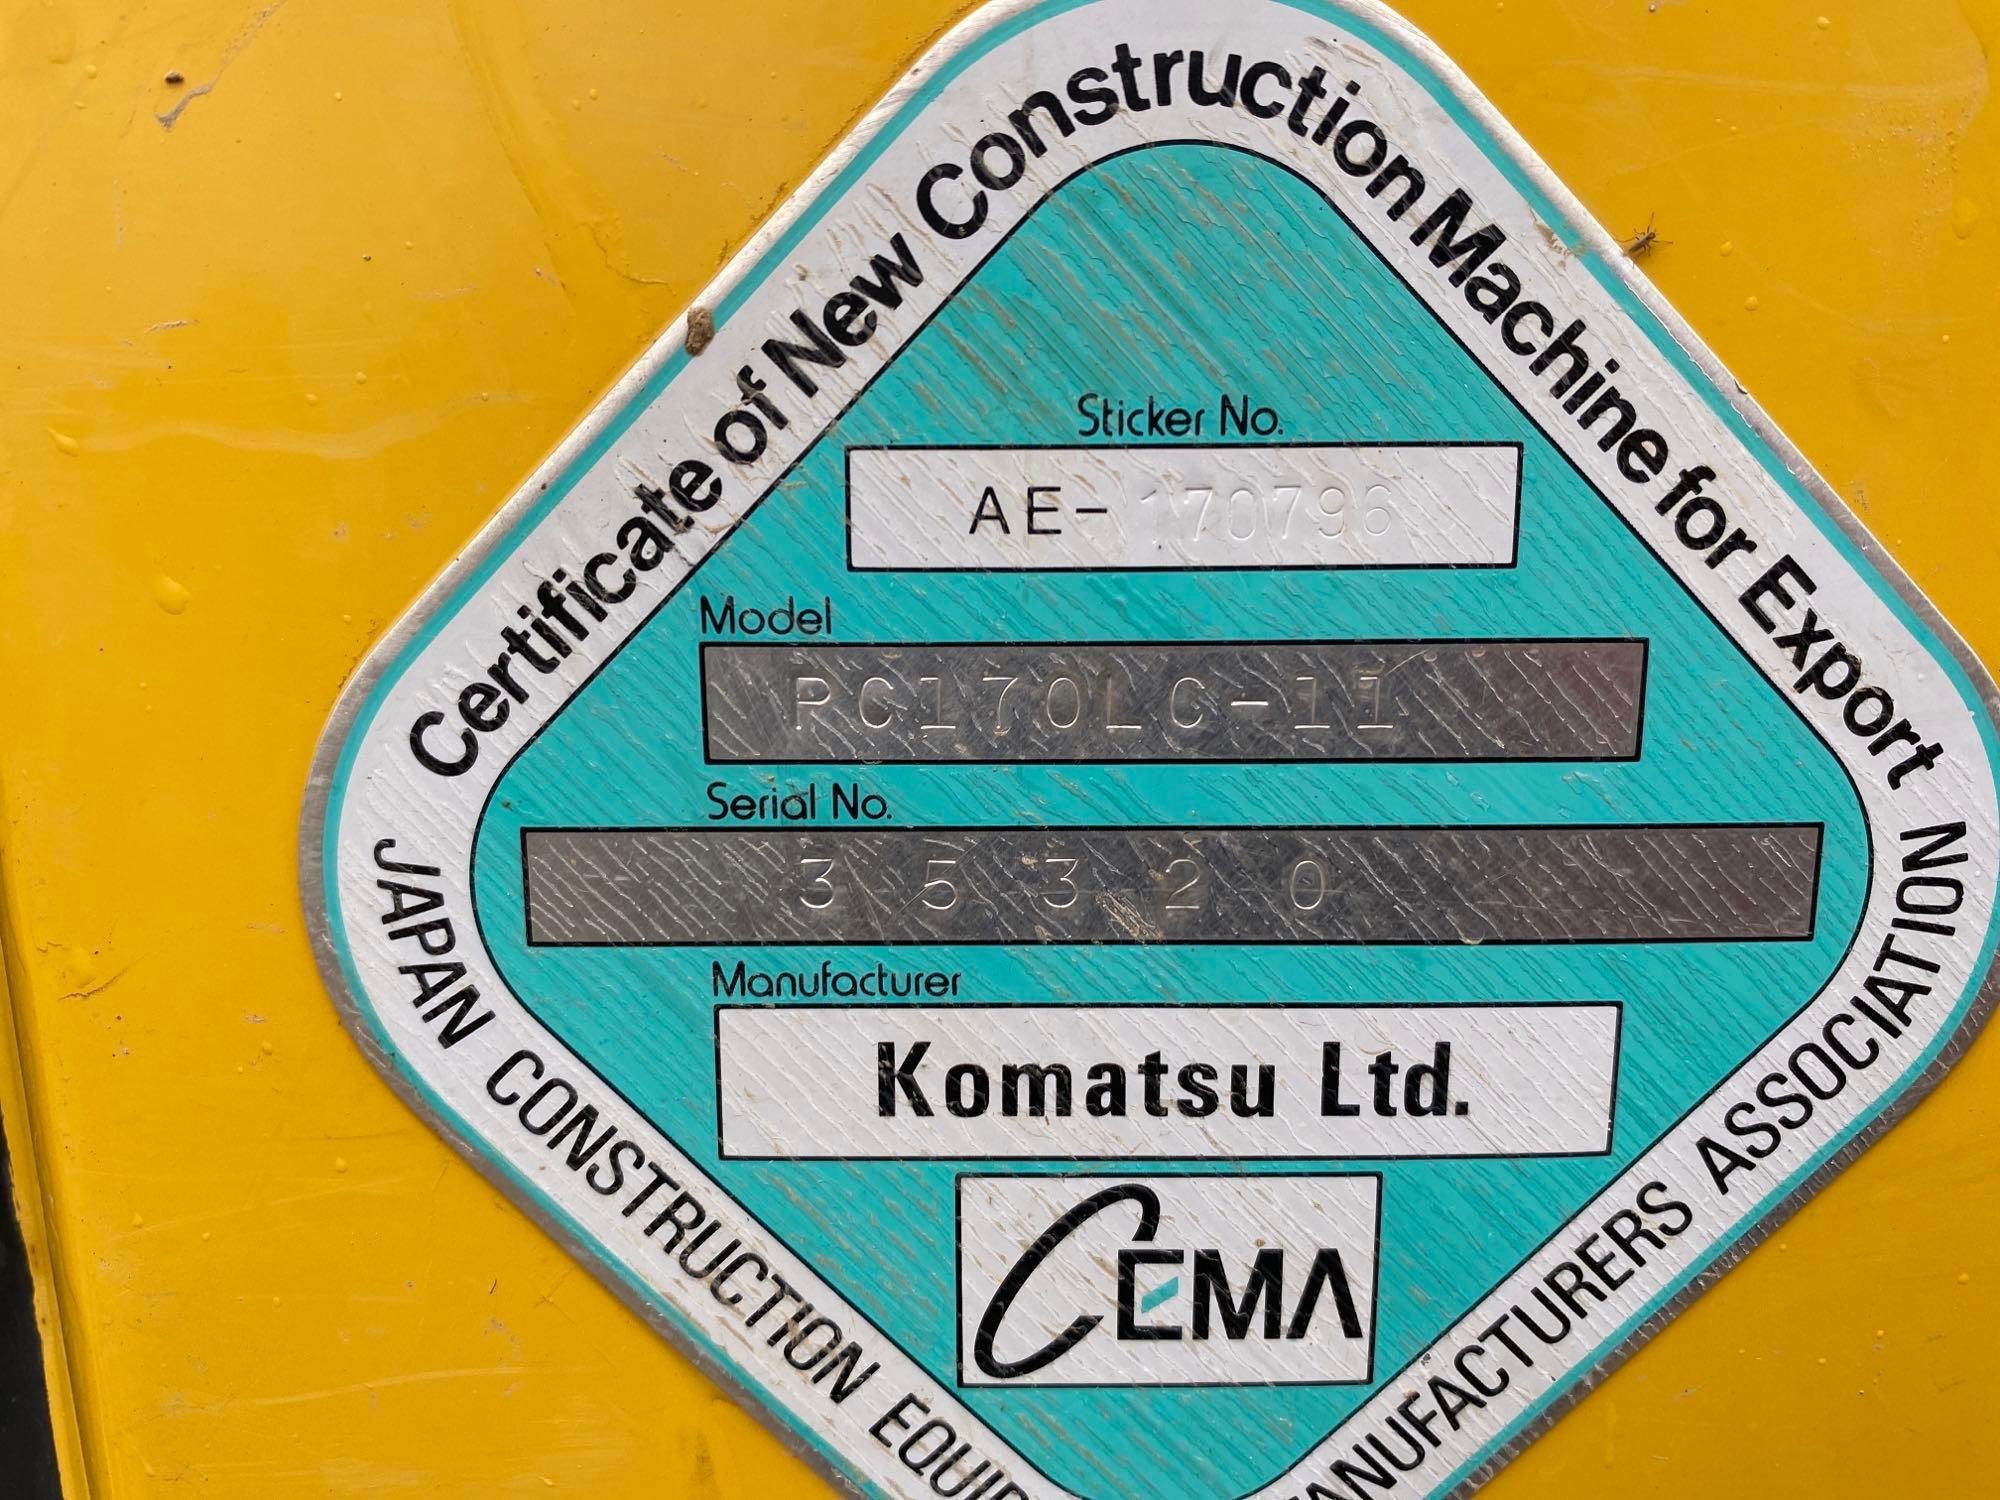 2017 Komatsu PC170 LC-11 Excavator, one owner